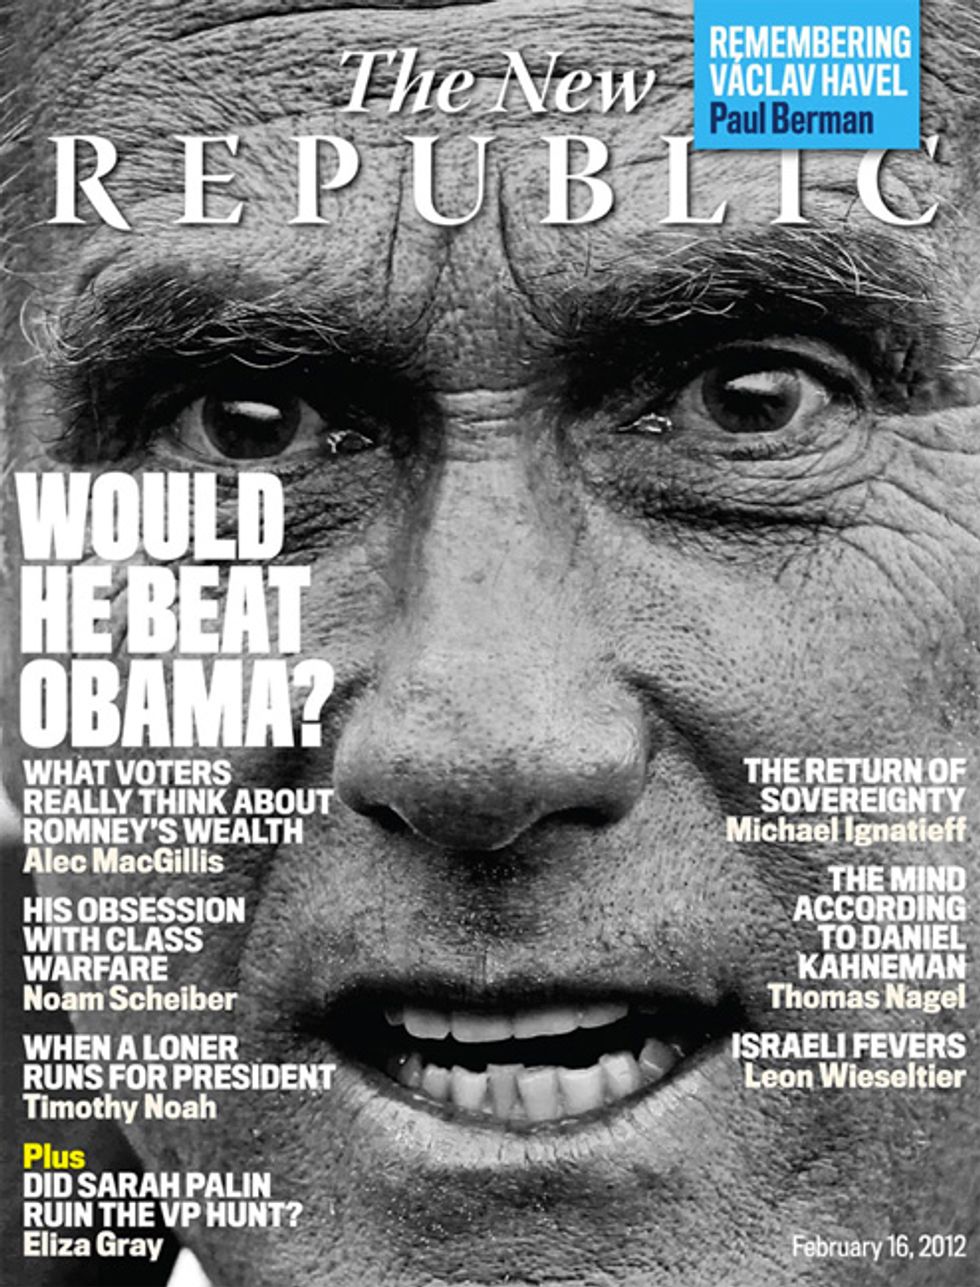 Gross Close-Ups of Mitt Romney's Face Based On This TNR Cover